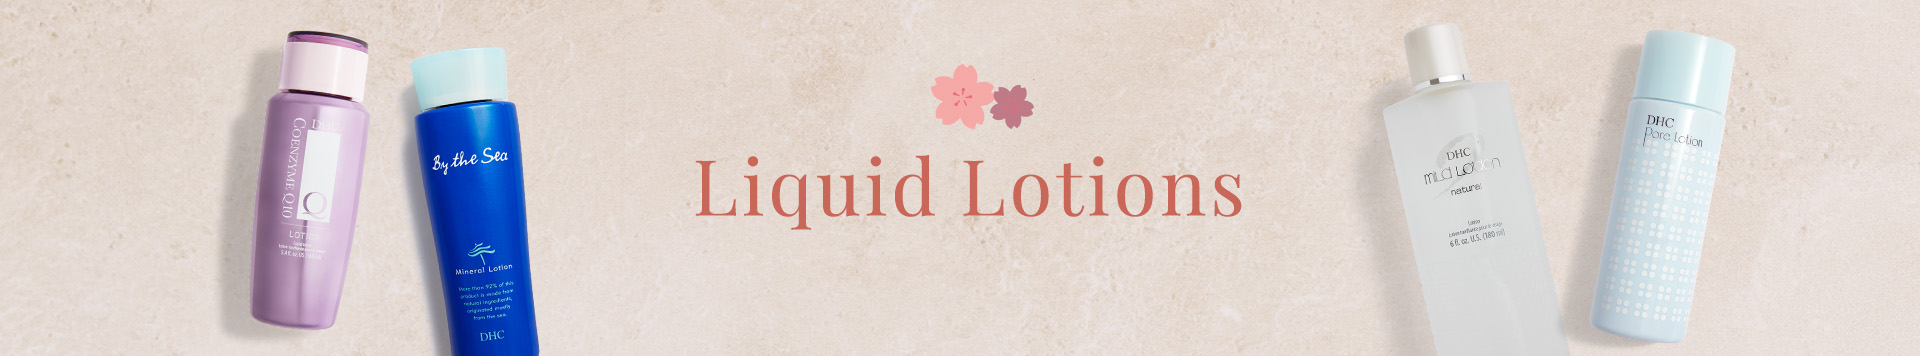 Liquid Lotions